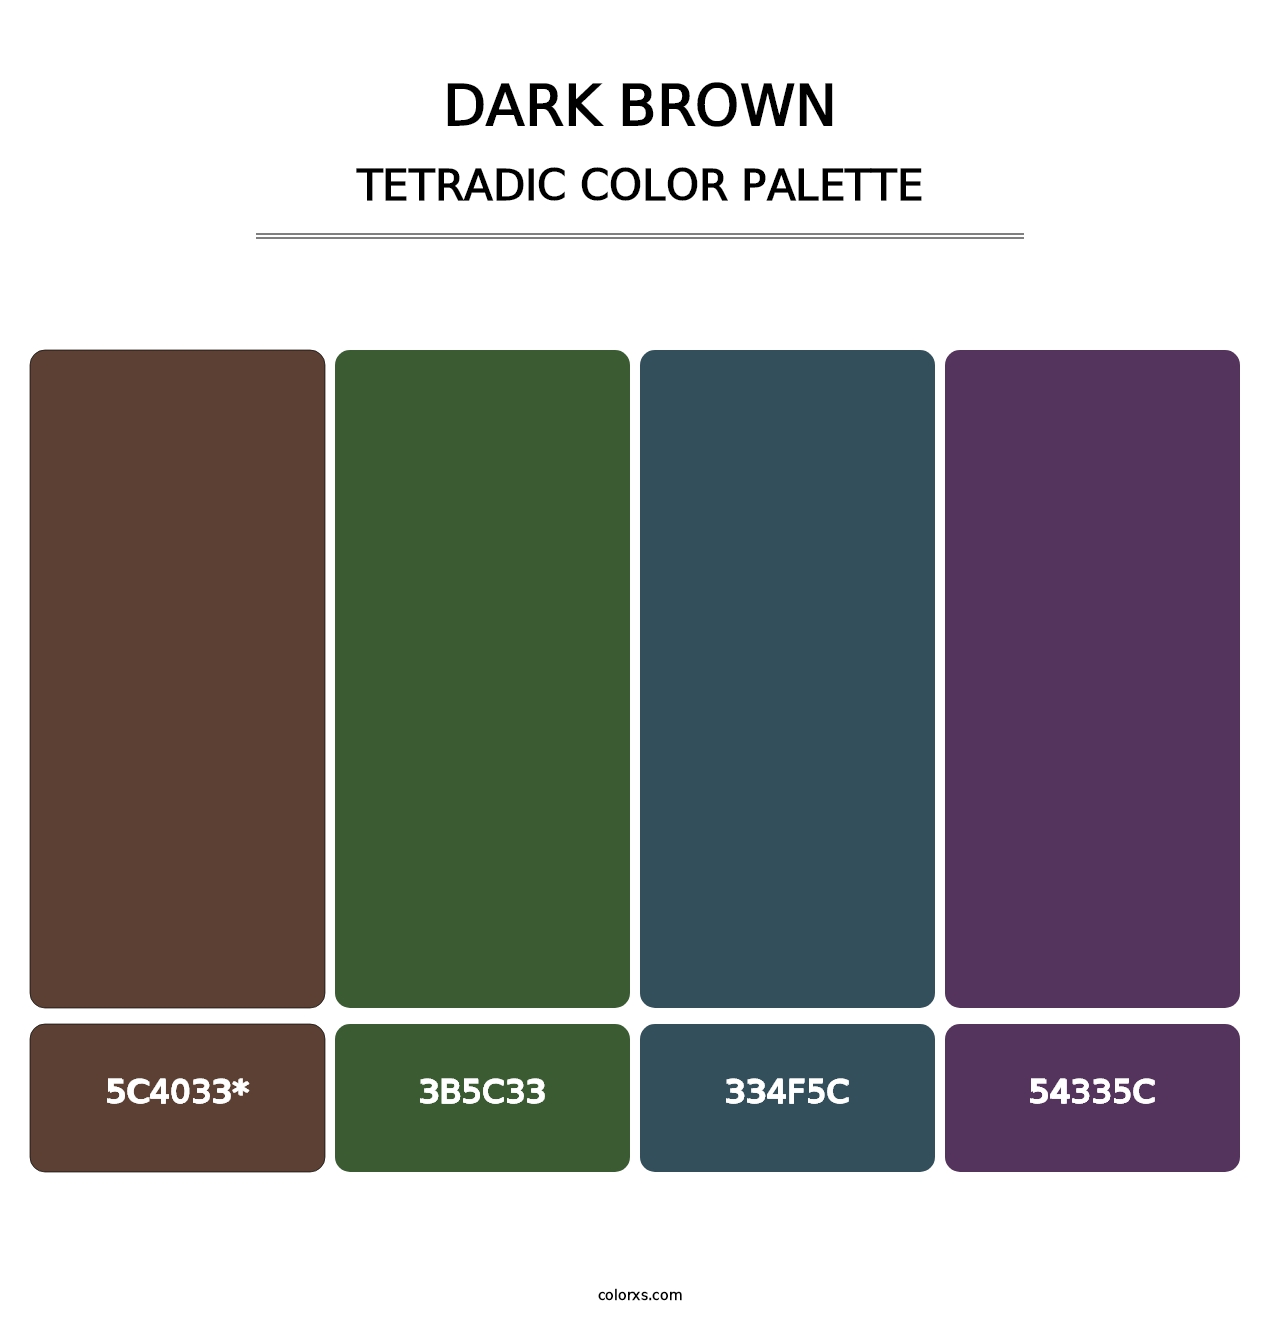 Dark Brown - Tetradic Color Palette